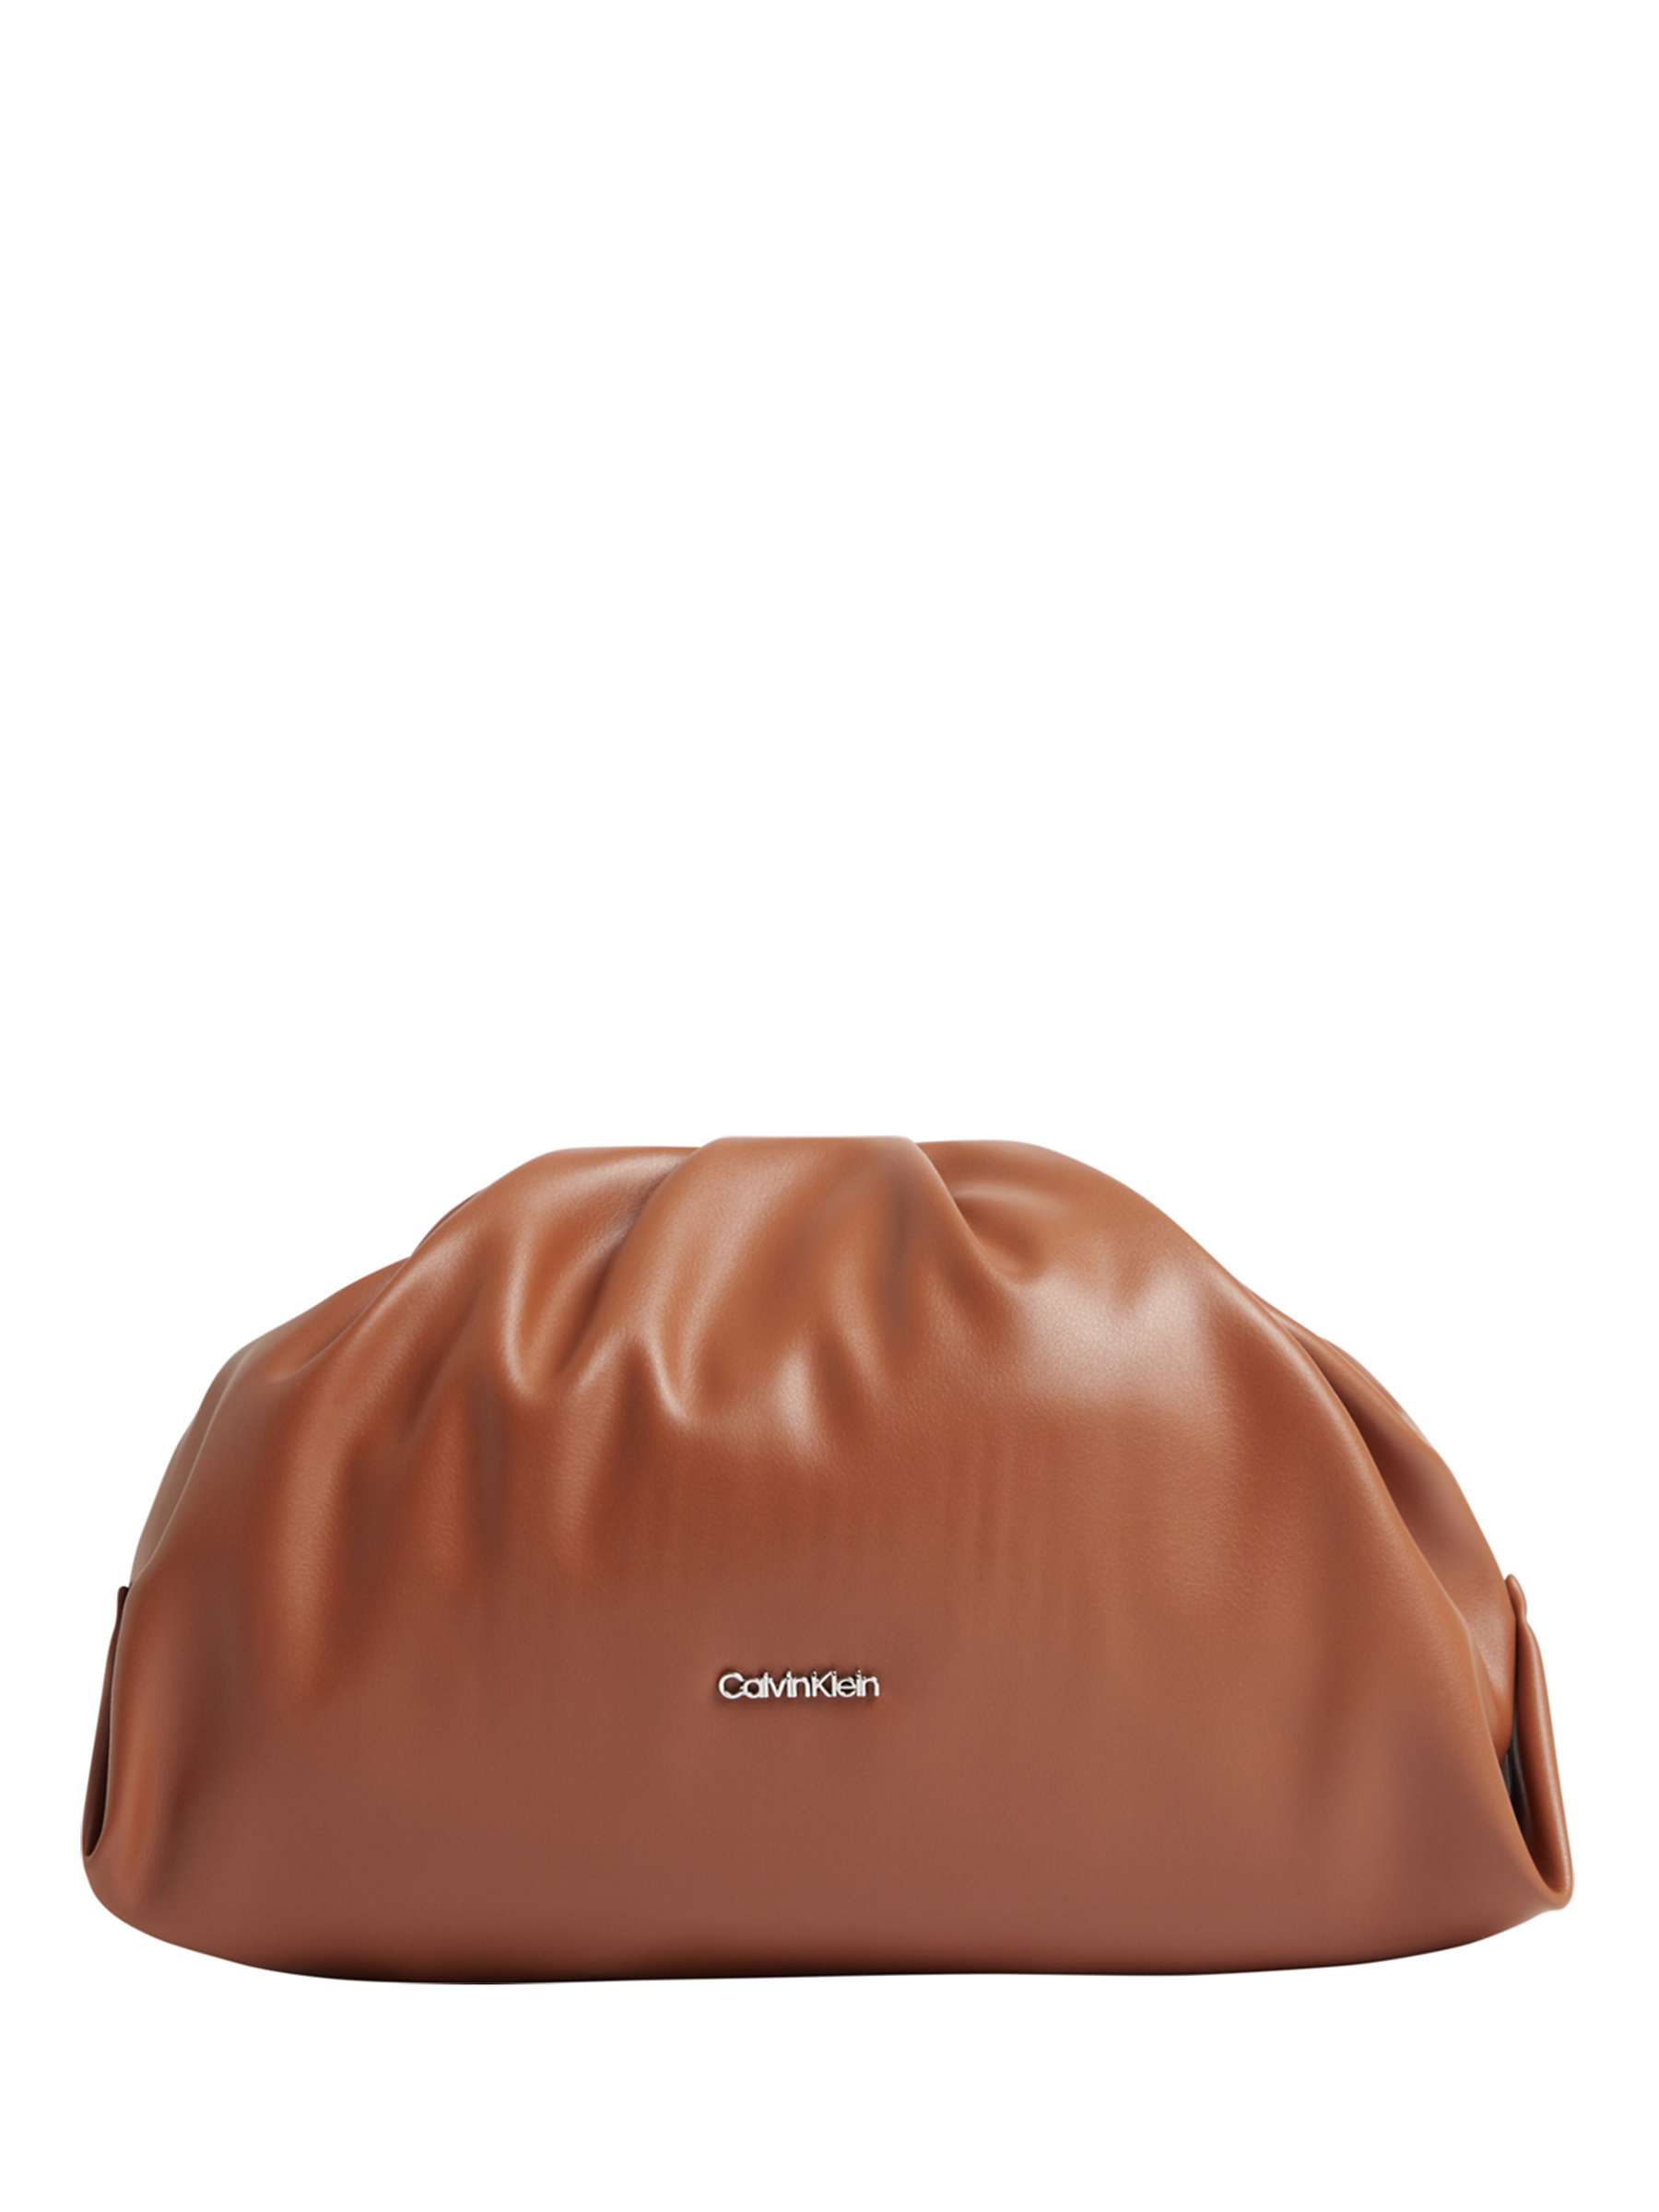 Calvin Klein Soft Clutch Bag, Cognac at John Lewis & Partners